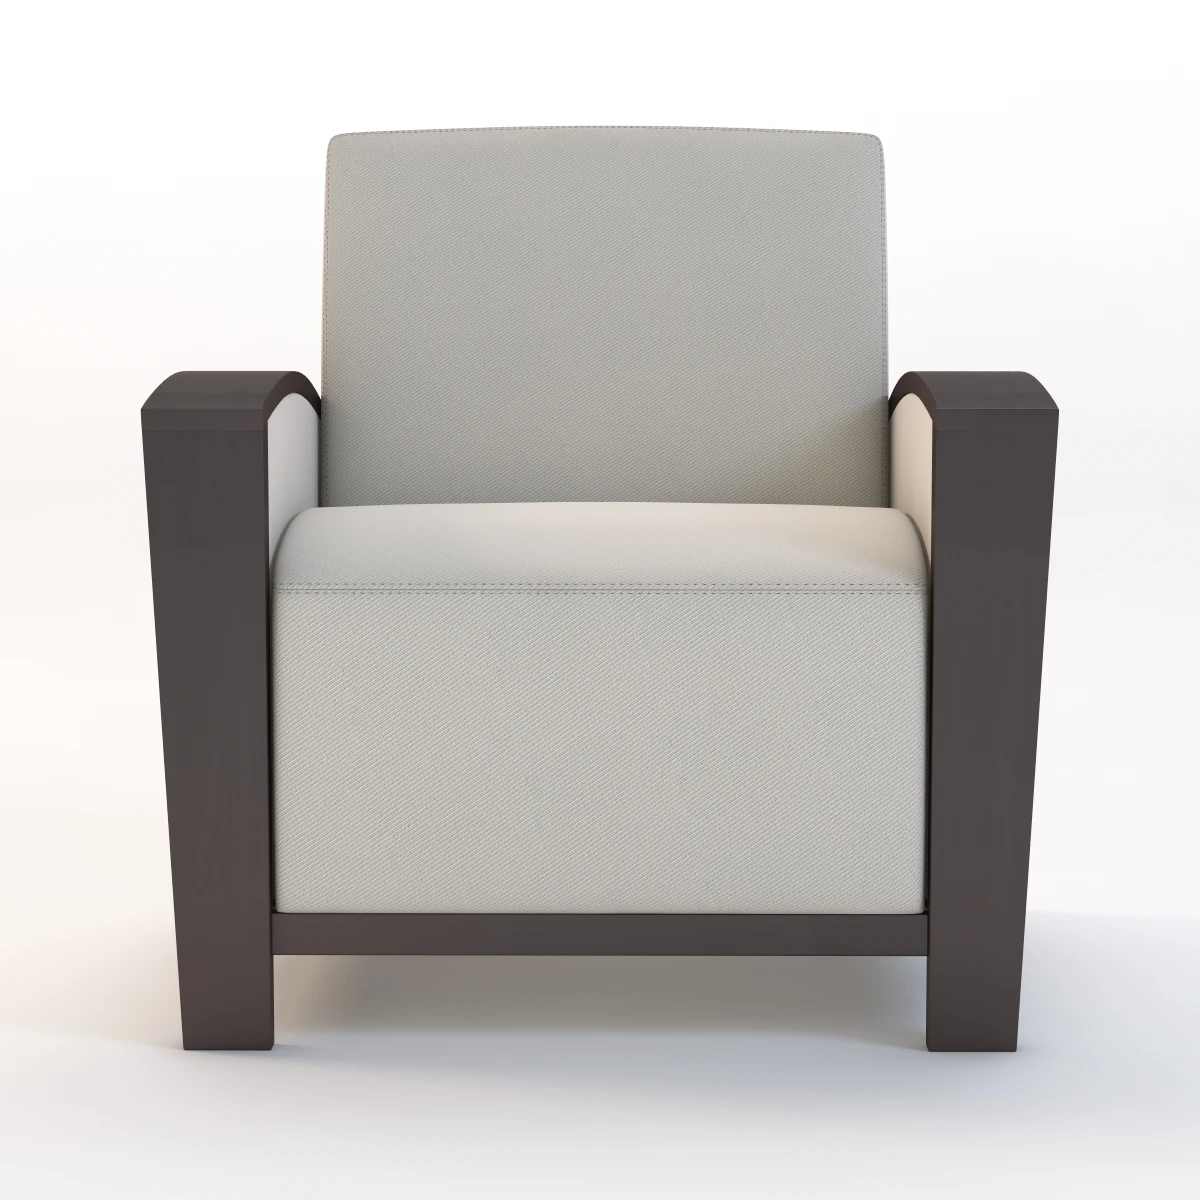 Nemschoff Franklin Lounge Chair Seating 3D Model_04